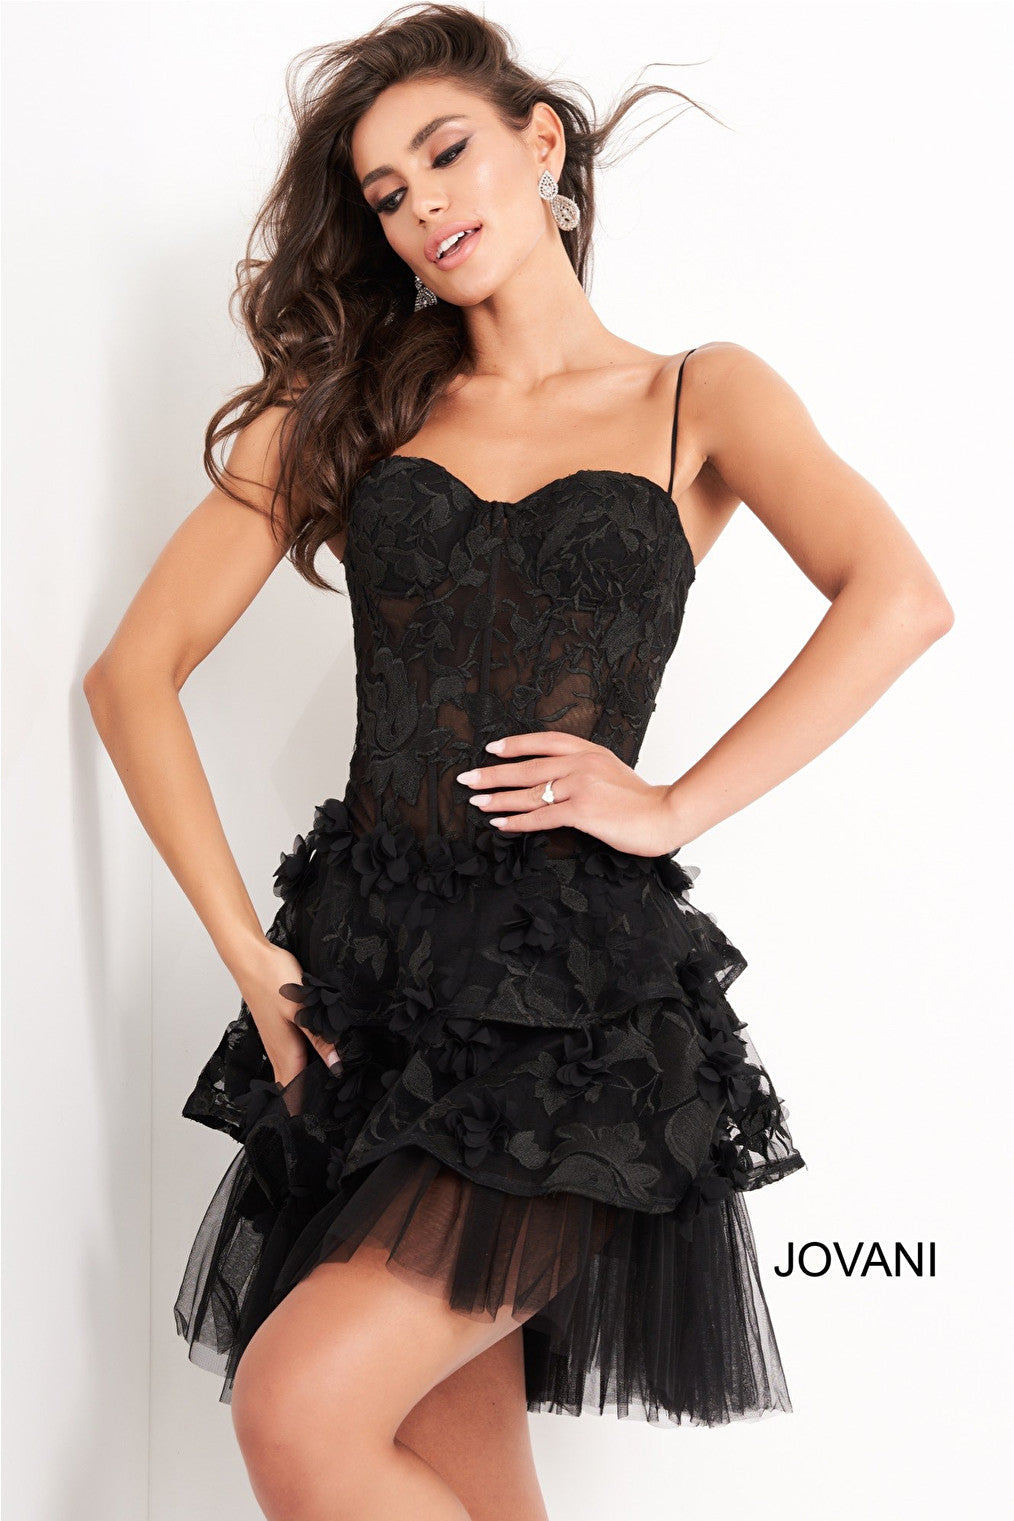 Black sheer corset bodice Jovani cocktail dress 3491